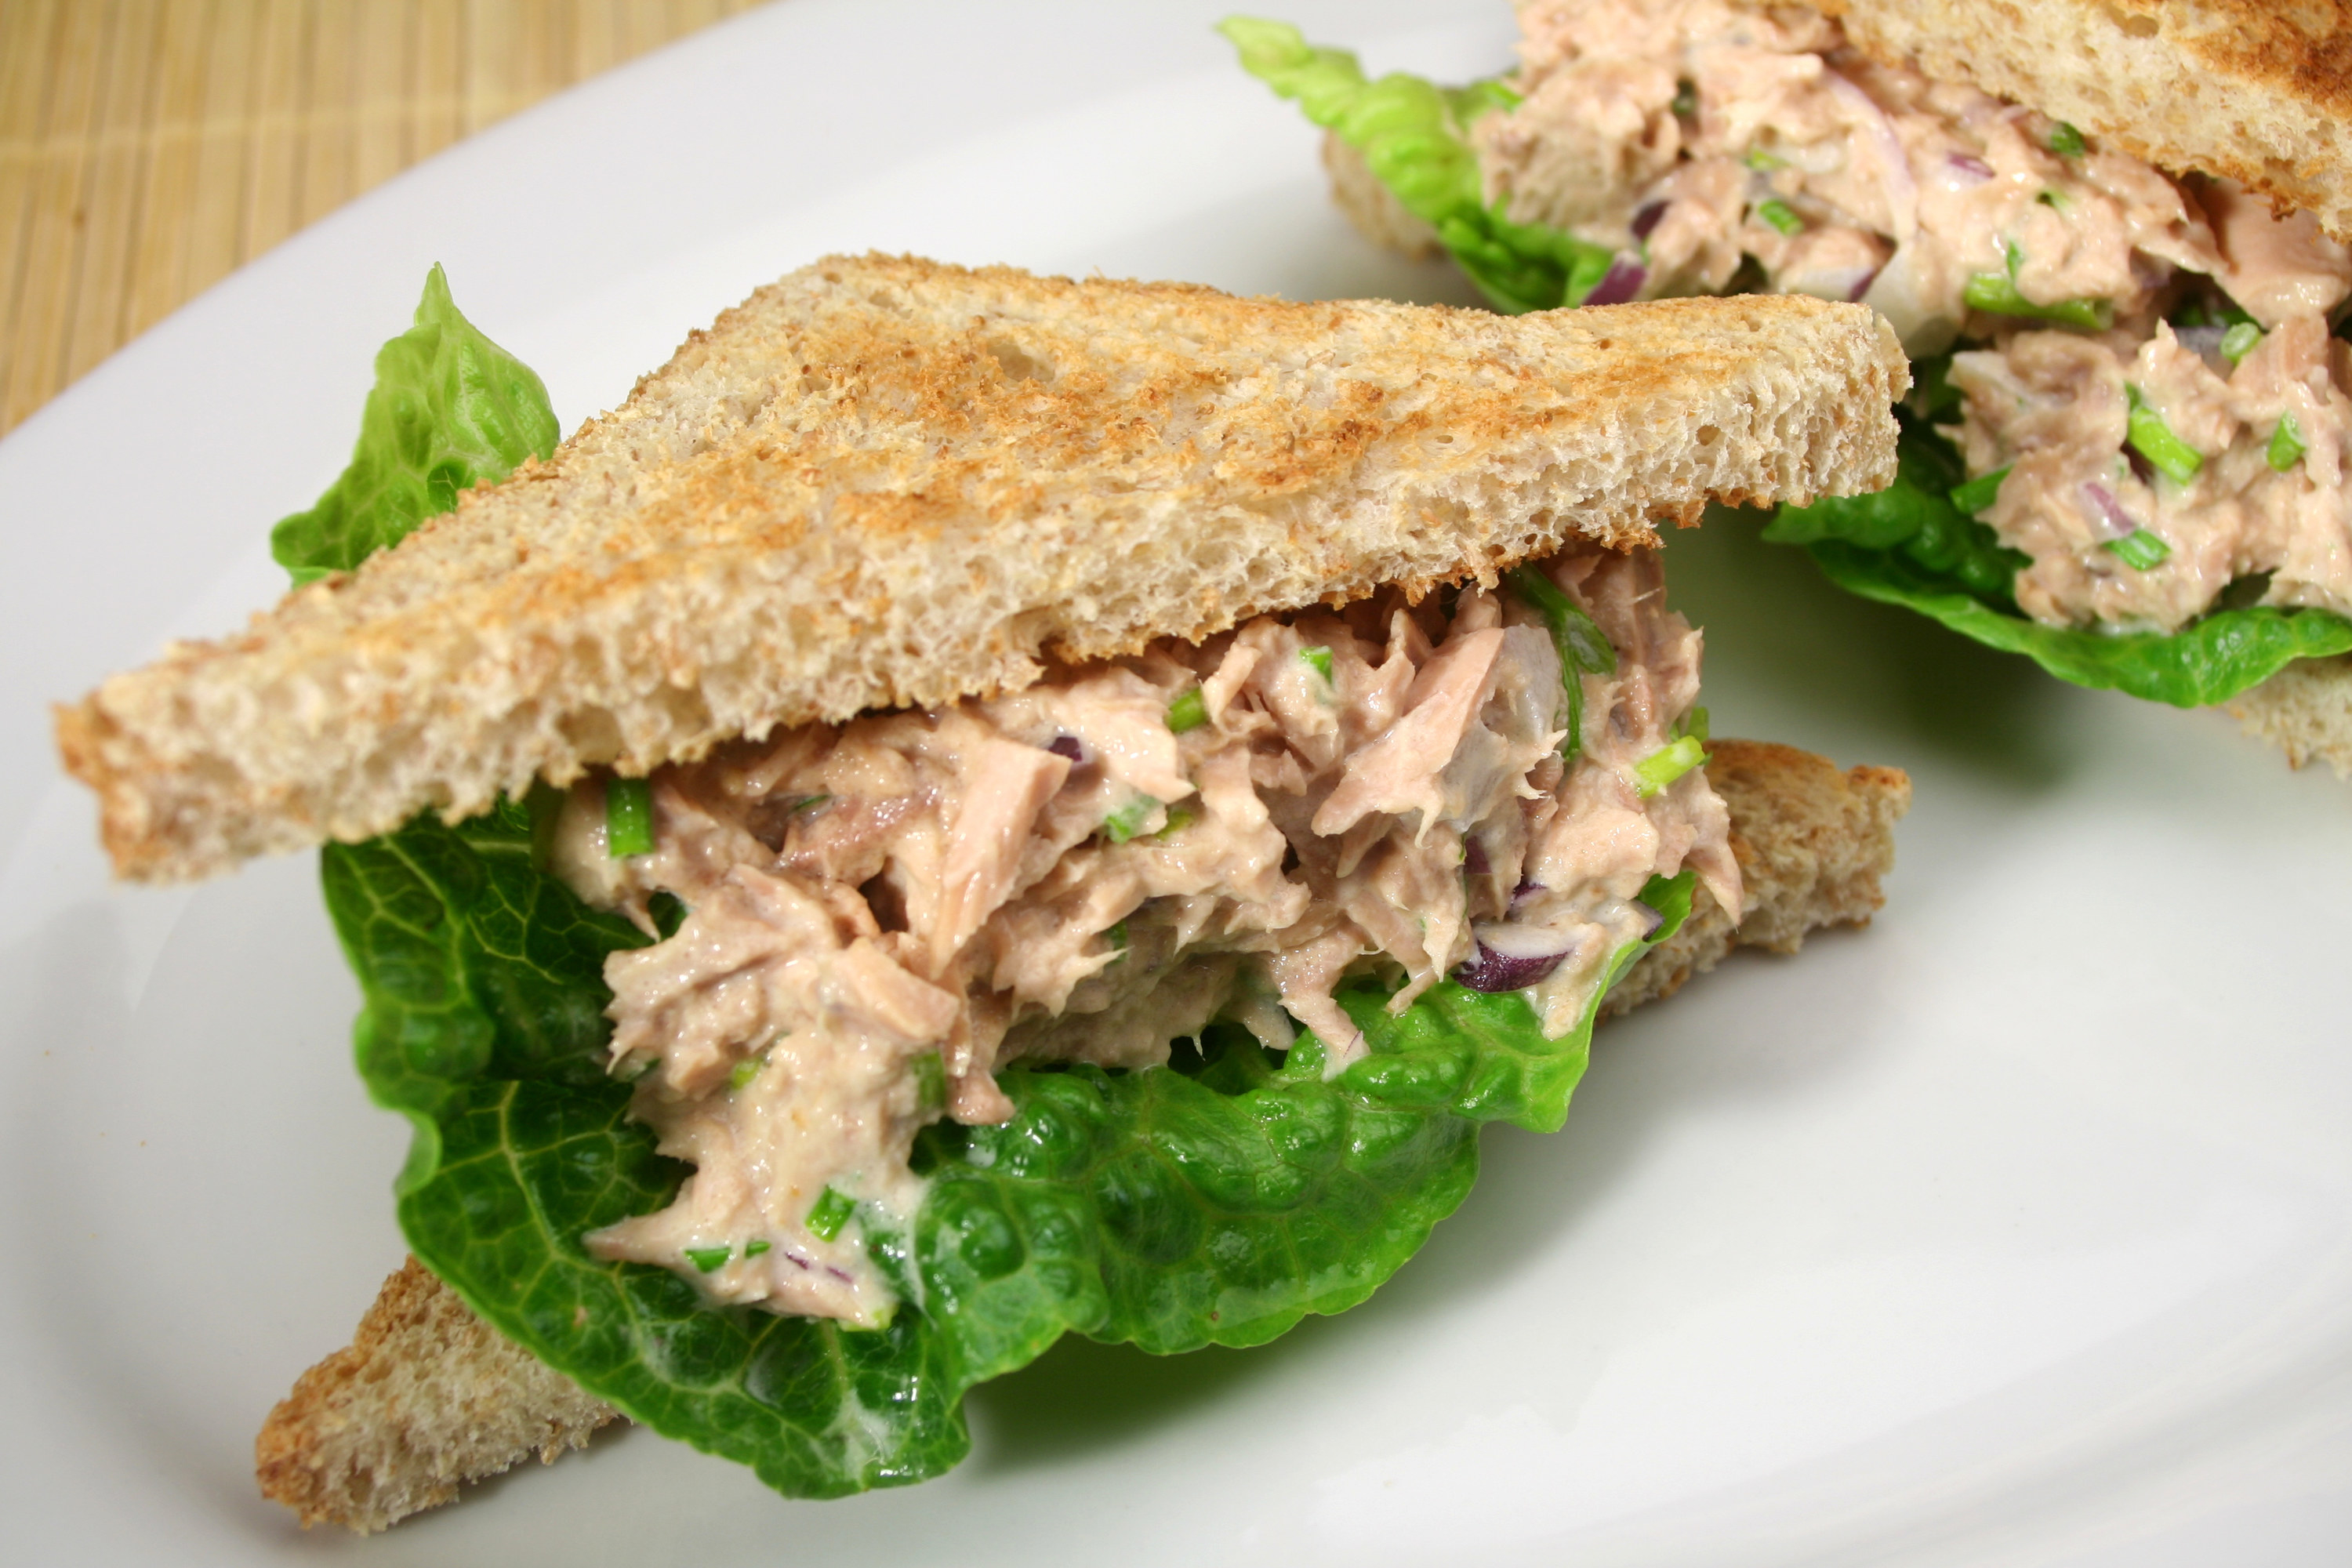 A tuna salad sandwich with lettuce.